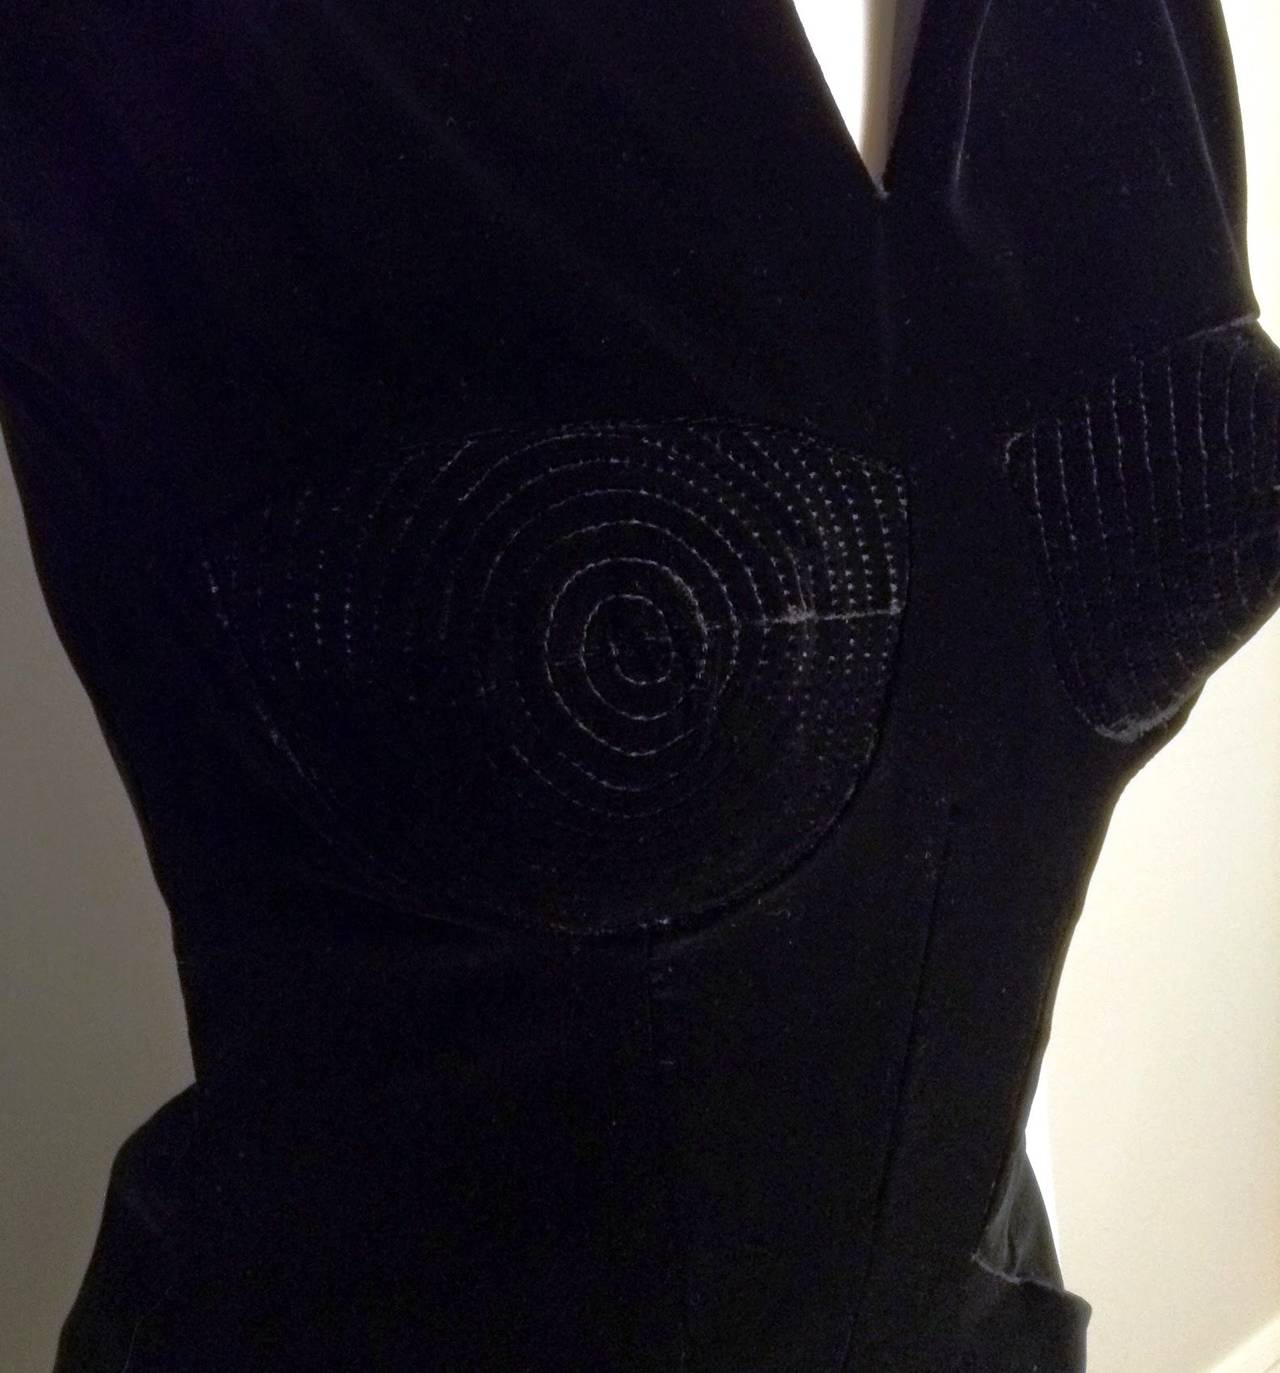 Tom Ford AW11 Black Velvet Cup Dress Unworn Size 2 1